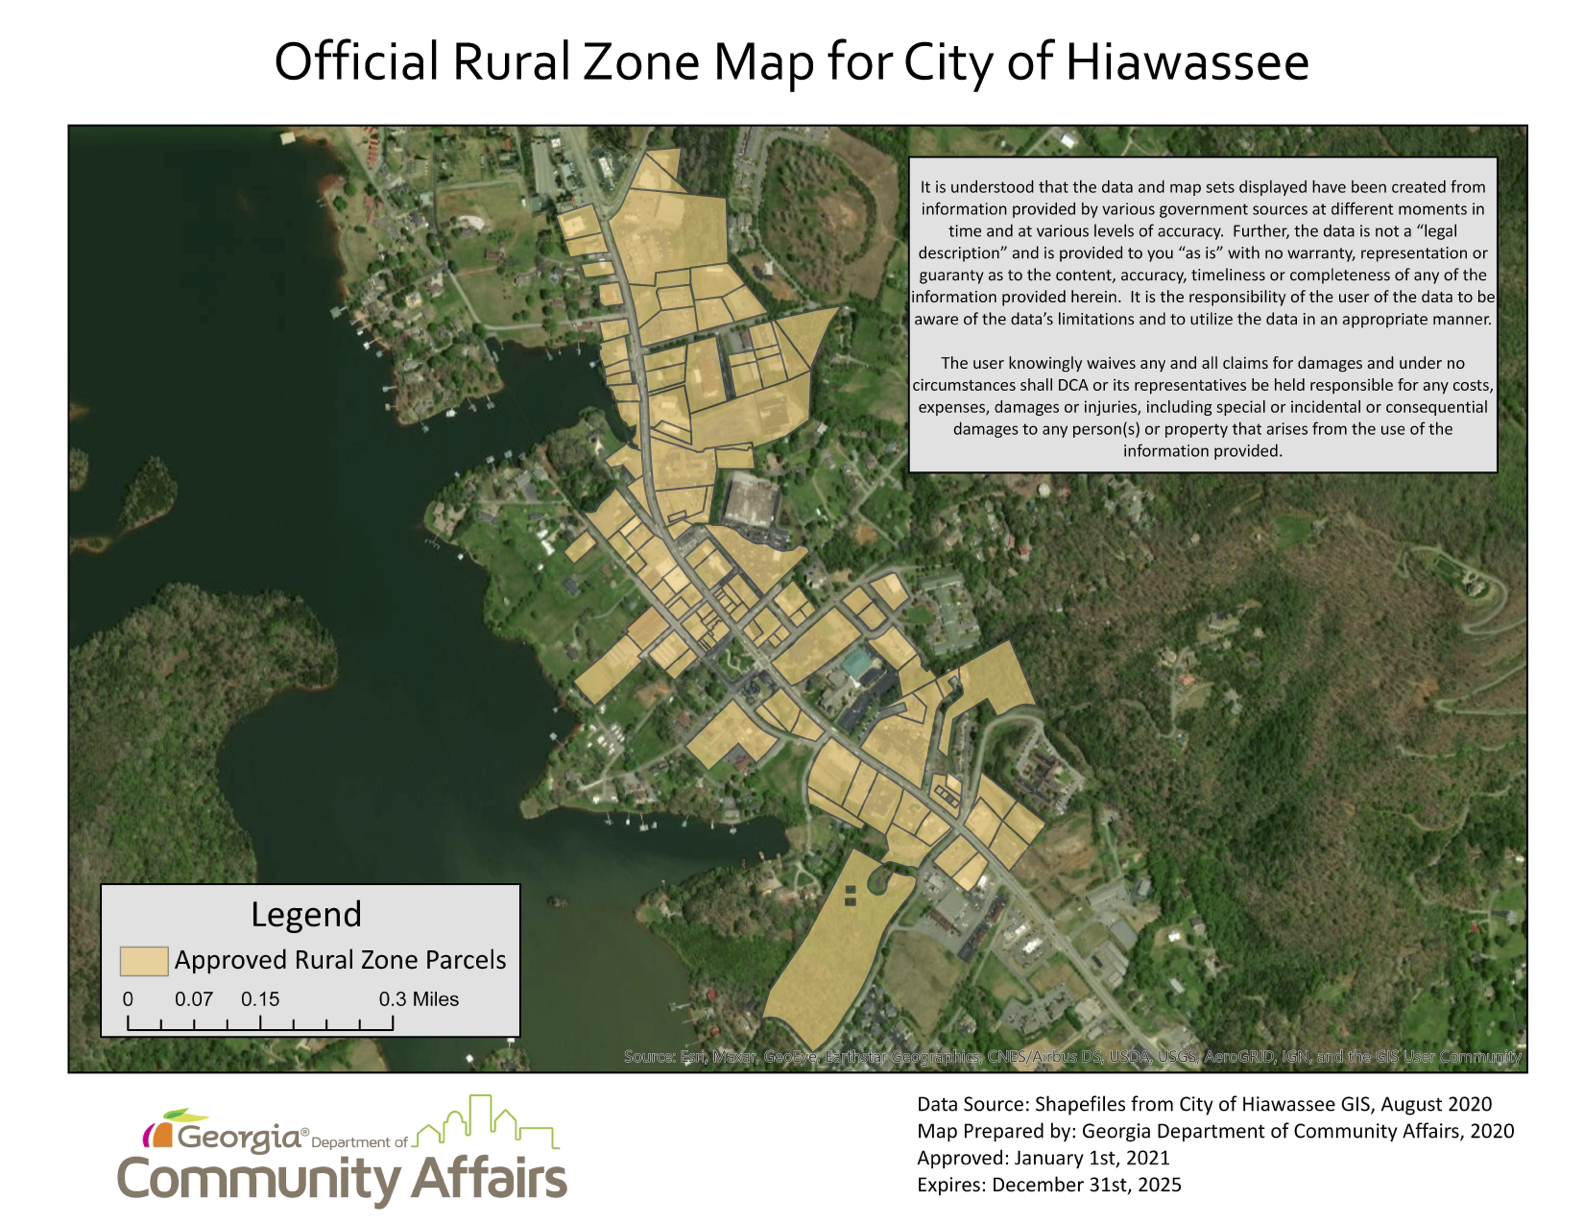 hiawassee final rural zone map